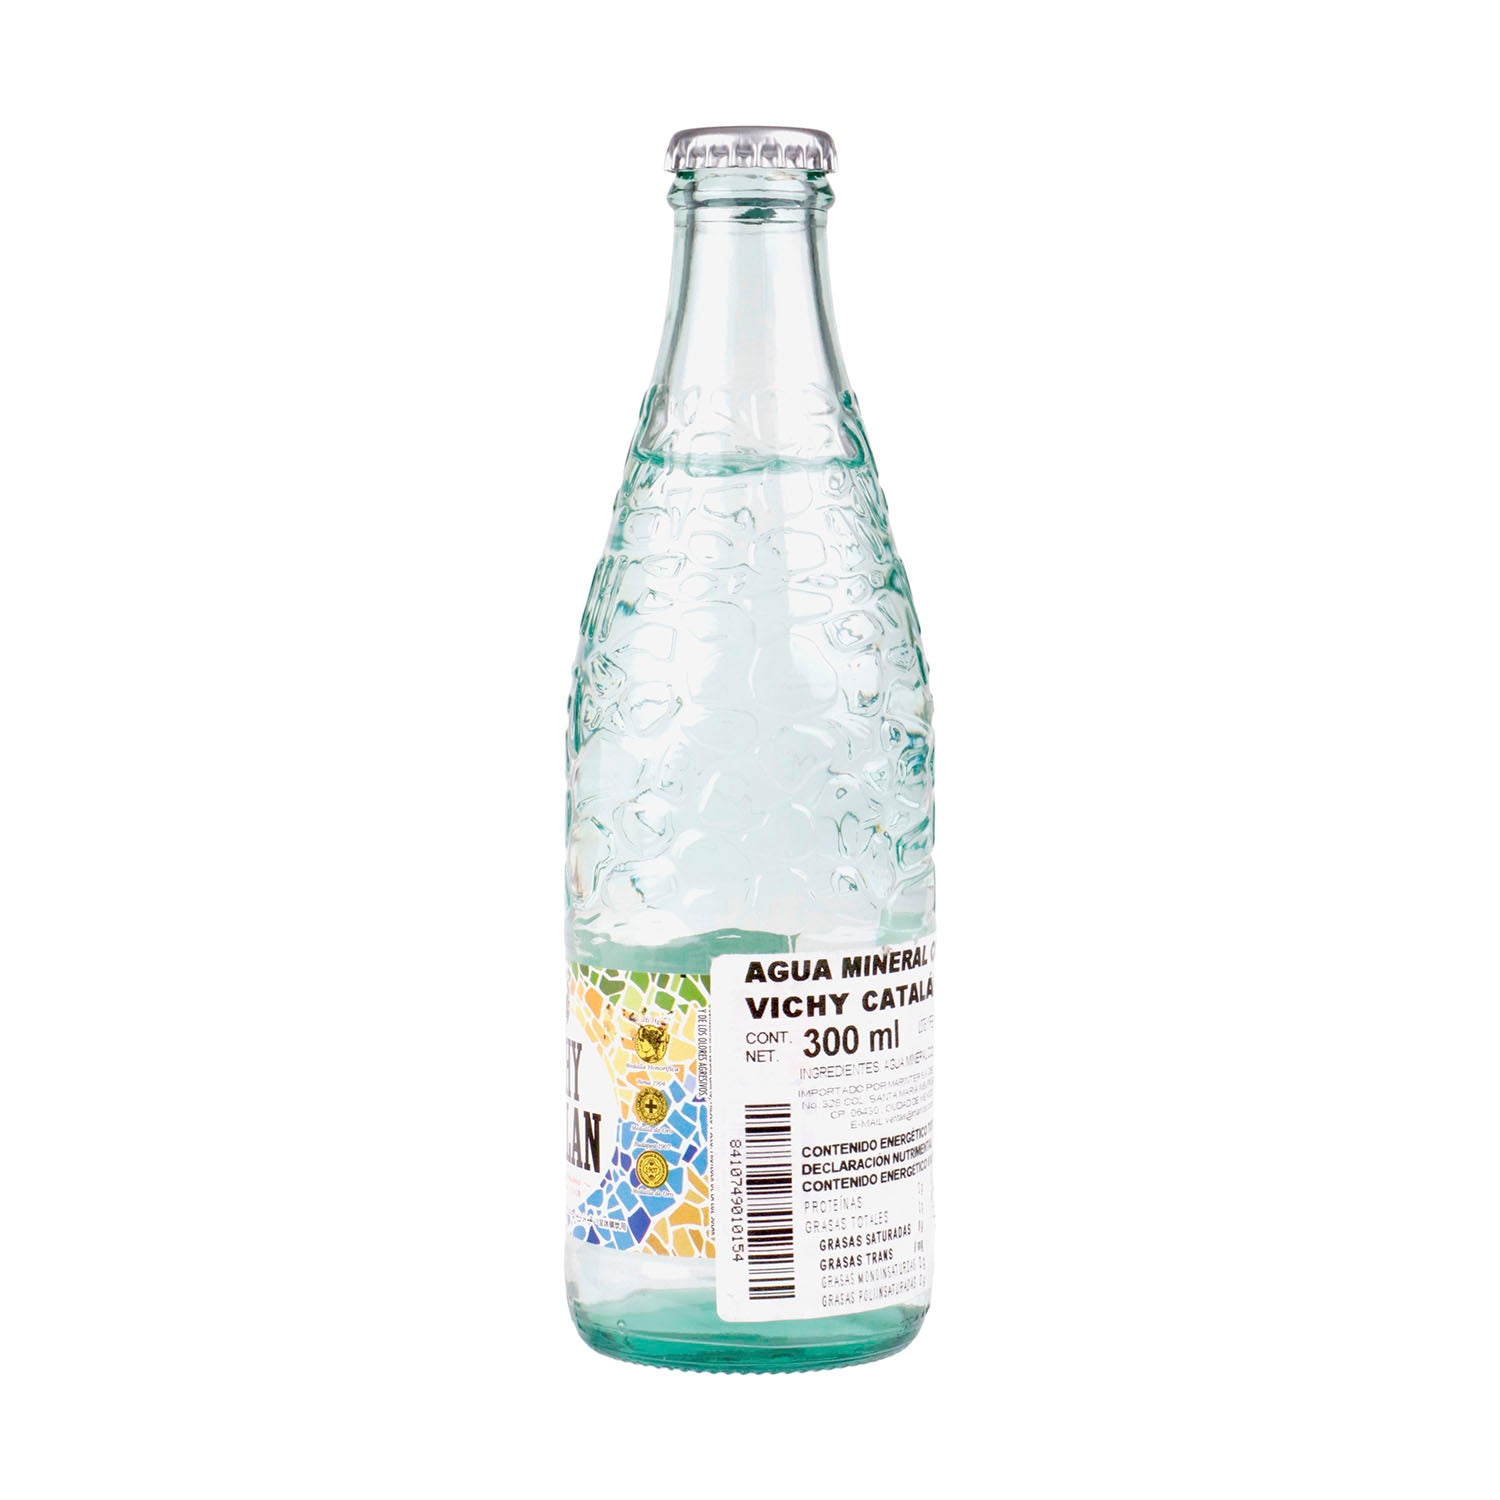 Agua Vichy Catalan Natural Mineral Carbonica de 300 ml